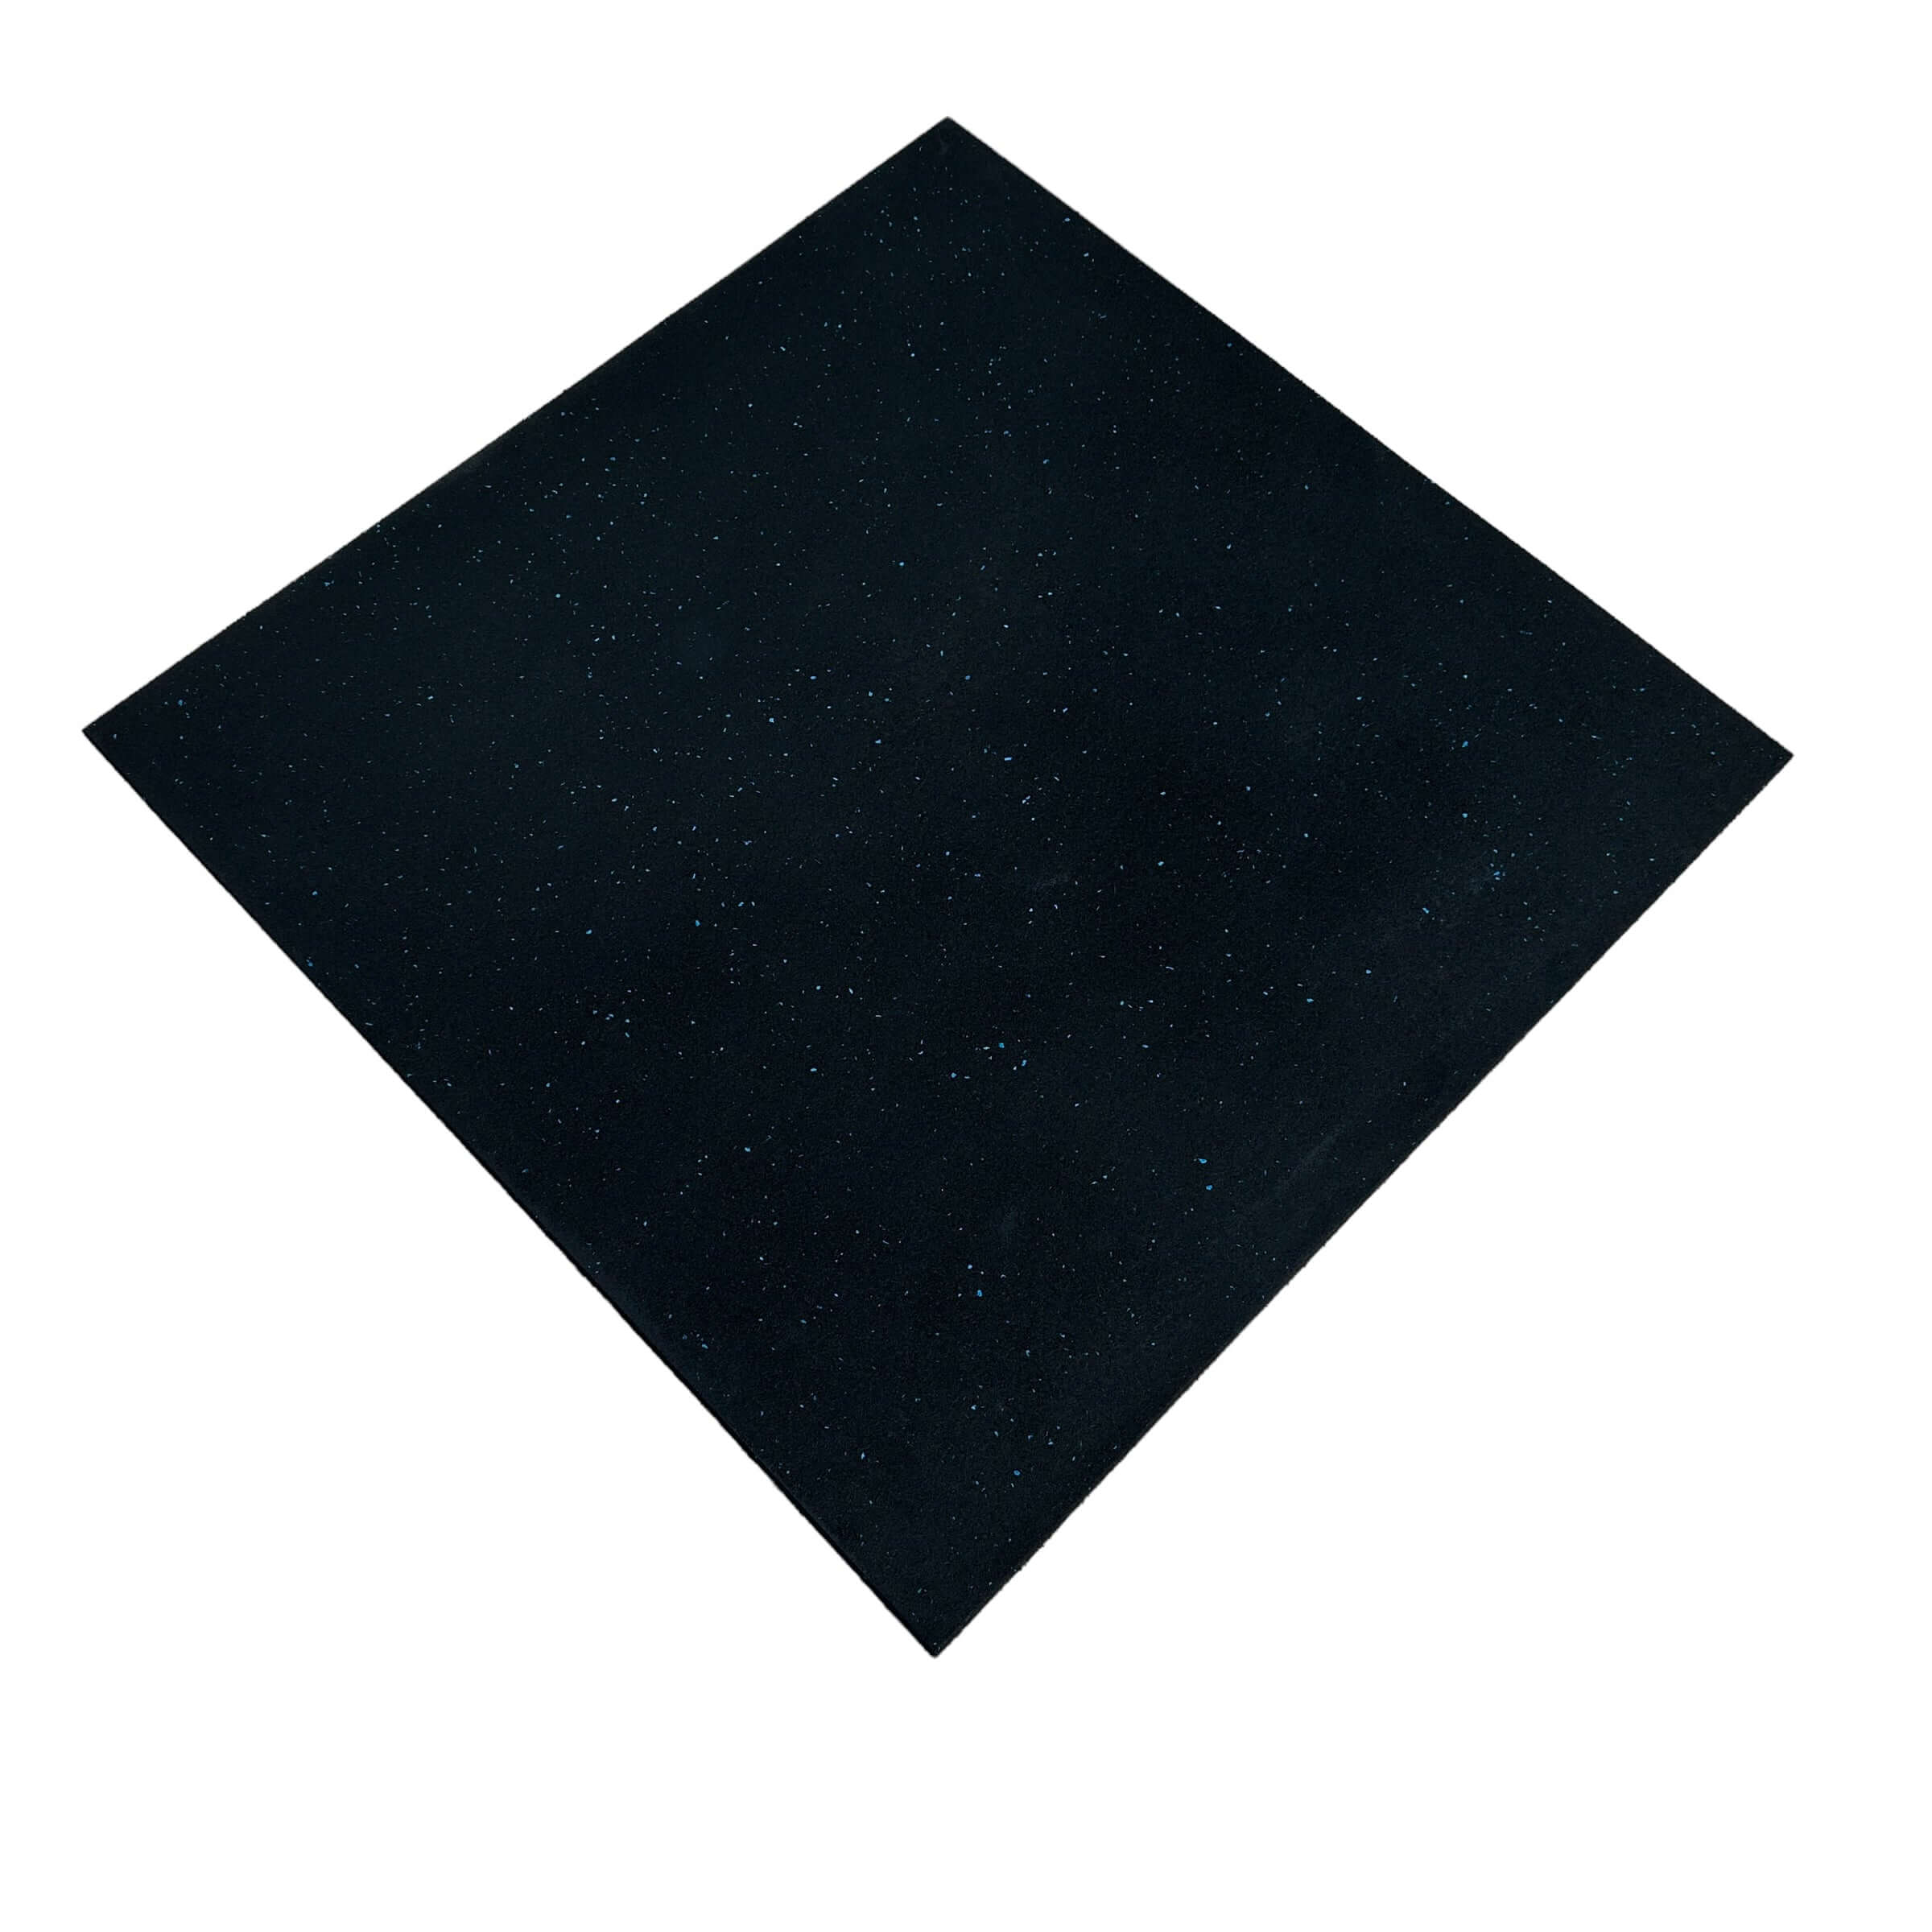 20 Pack 15mm Rubber Gym Flooring BLACK / BLUE Fleck Dense Tile Mat 1m x 1m | INSOURCE